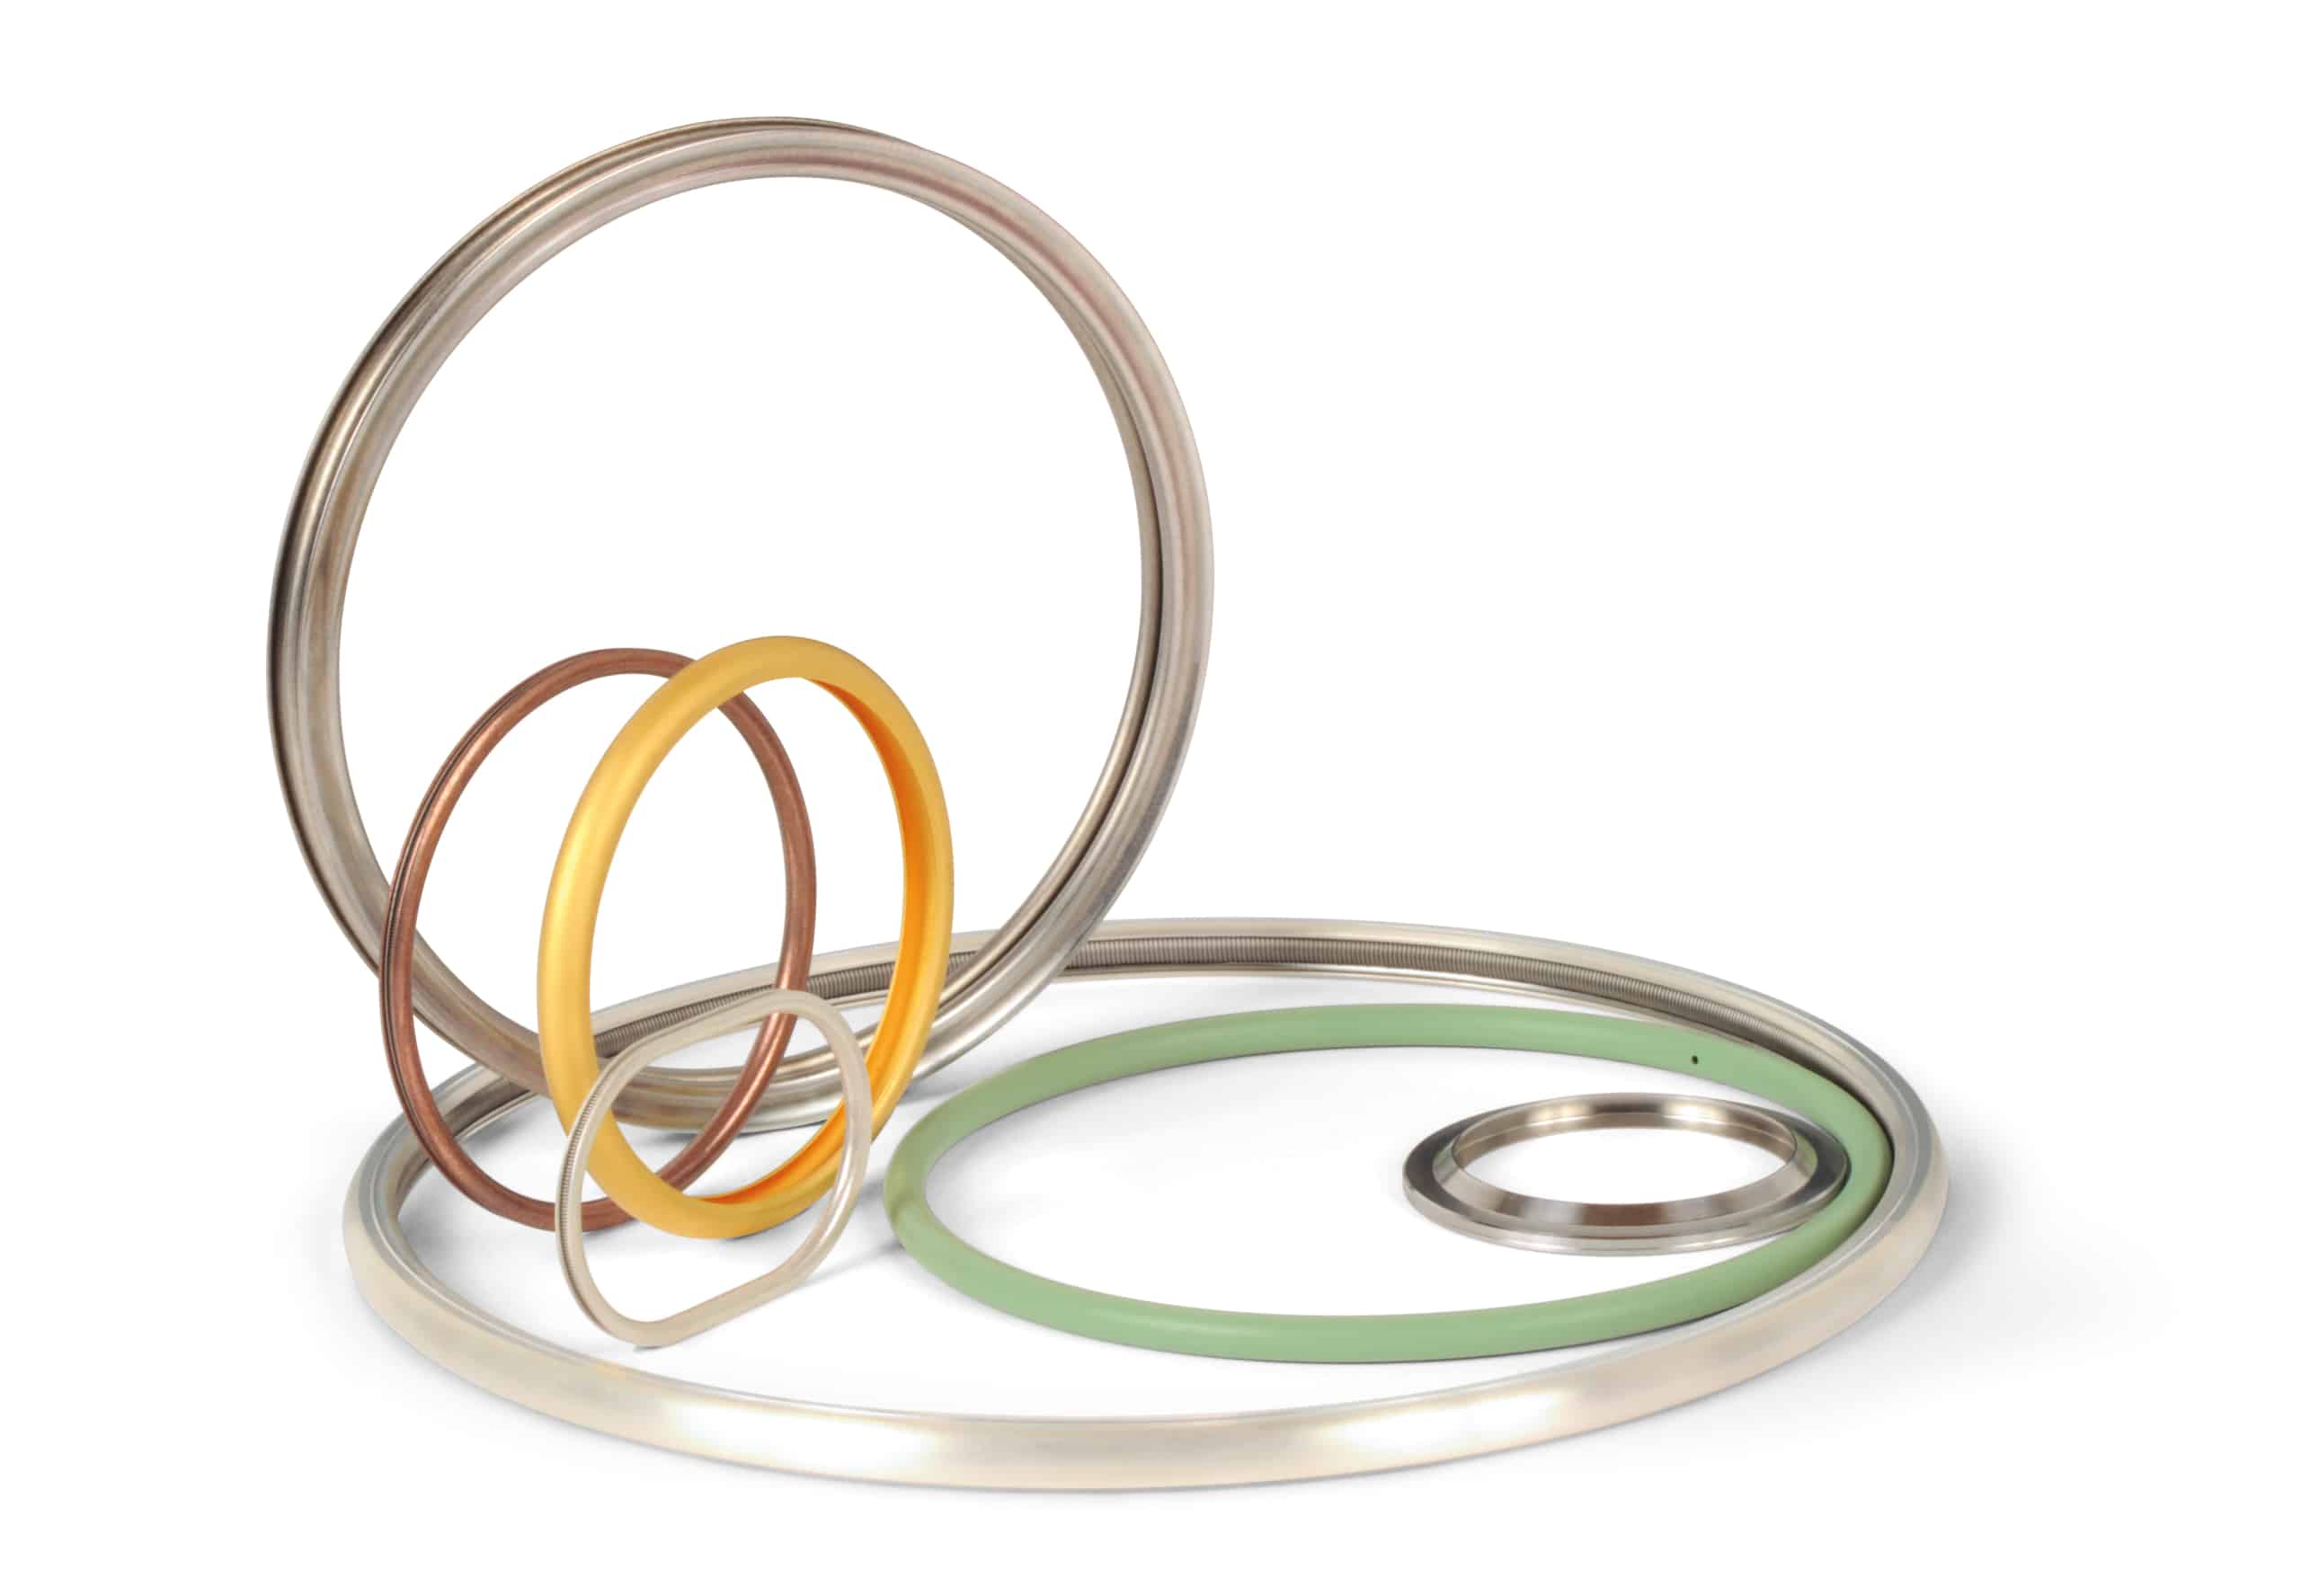 High Quality Metal Detectable O-rings Distributor - SSP Seals